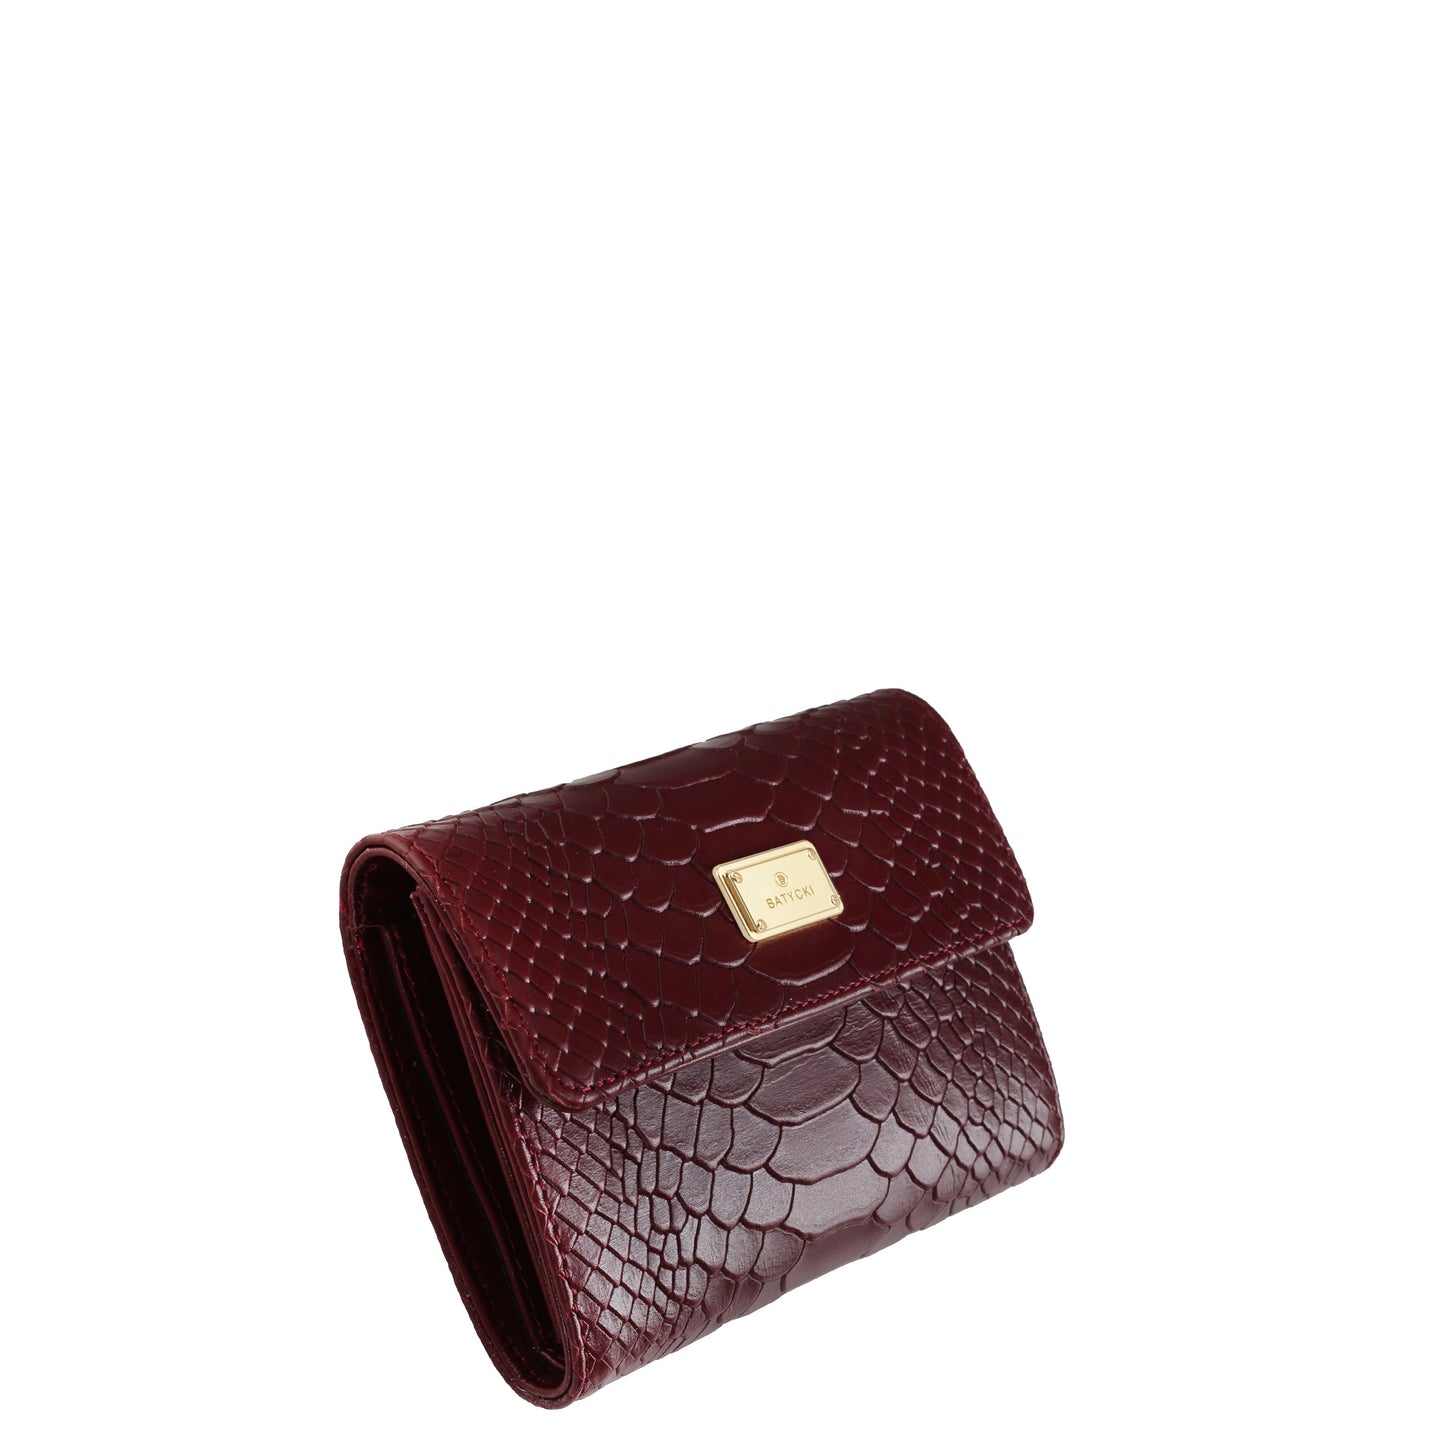 CLARET women's leather wallet